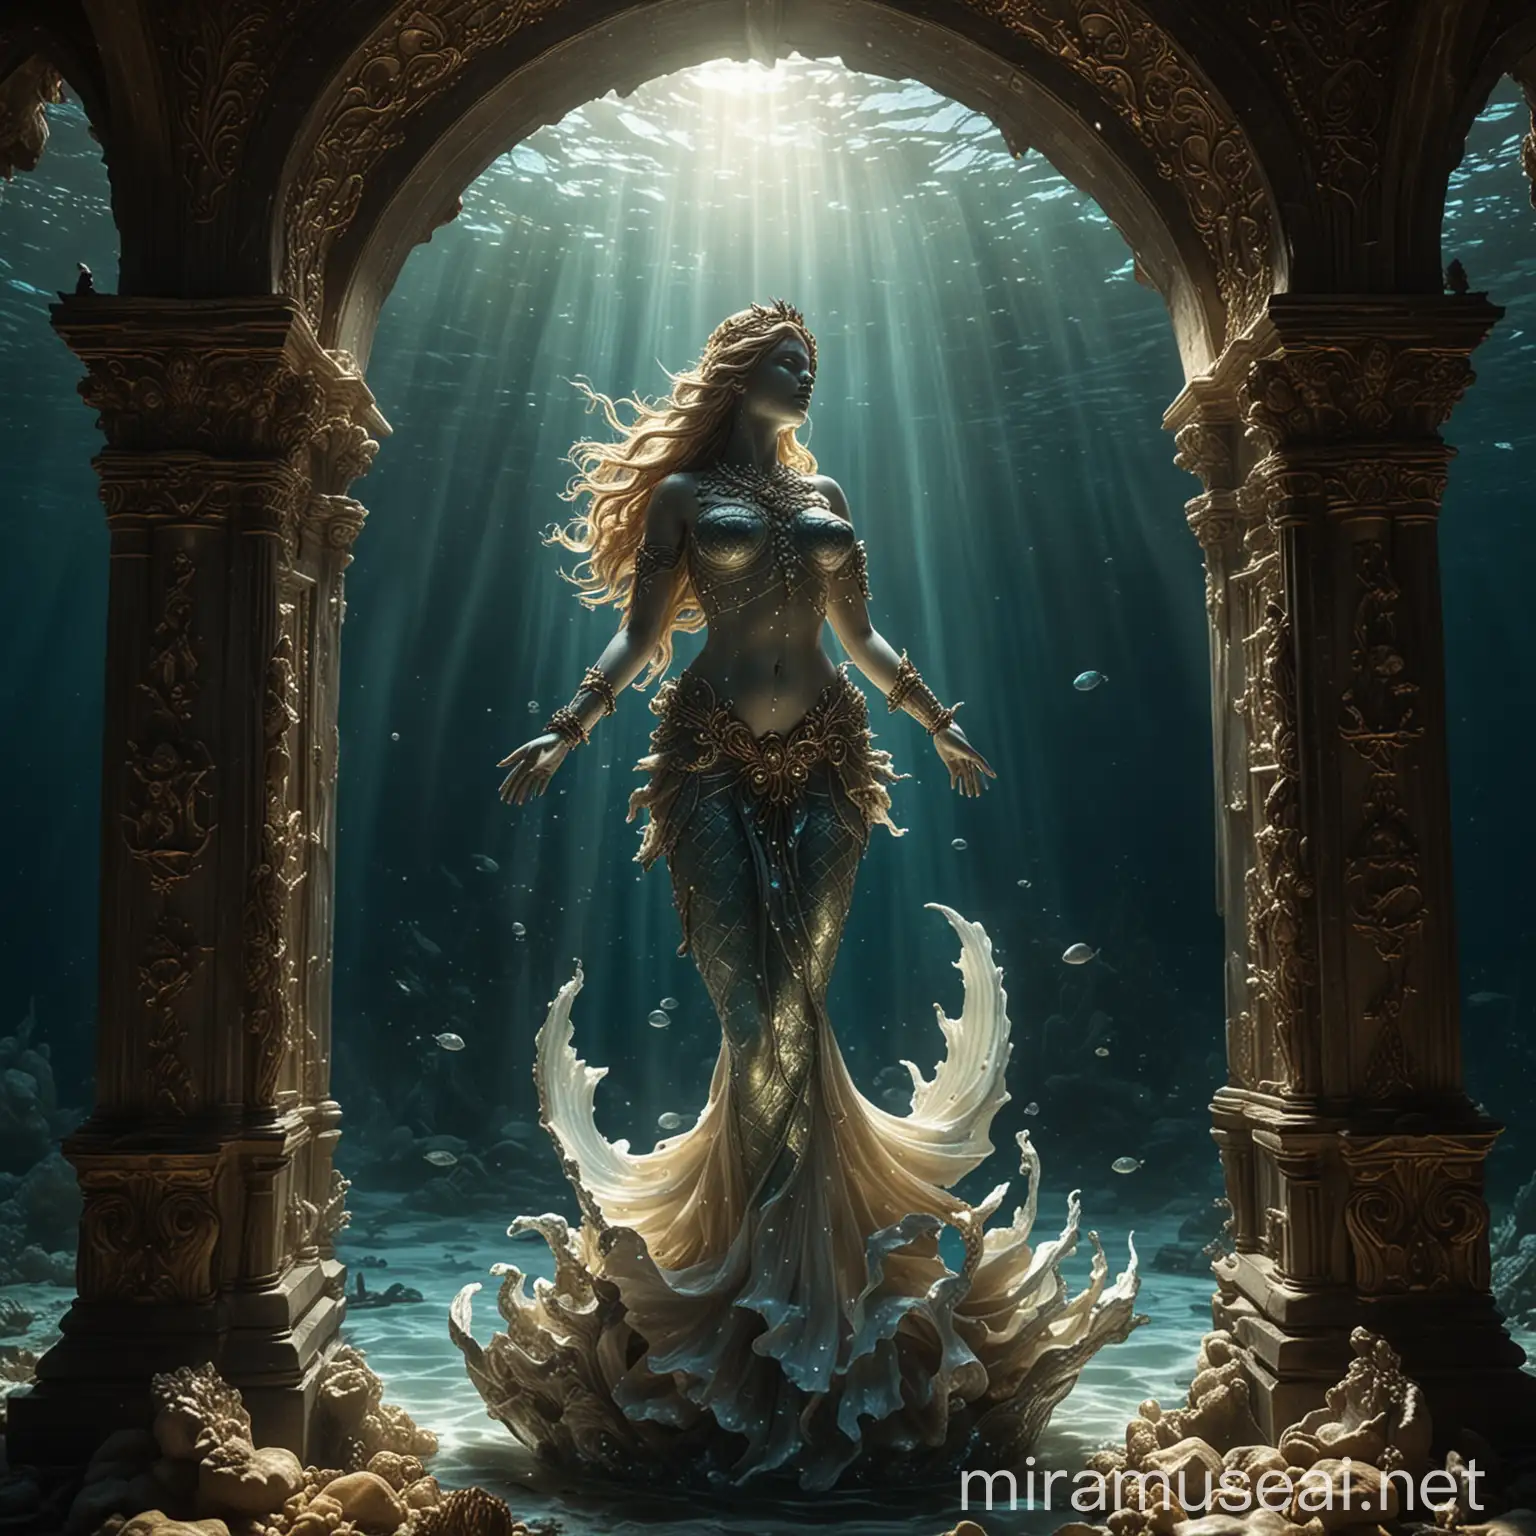 Celestial Mermaid Statue in Underwater City Portal Ethereal Sea Fantasy Art